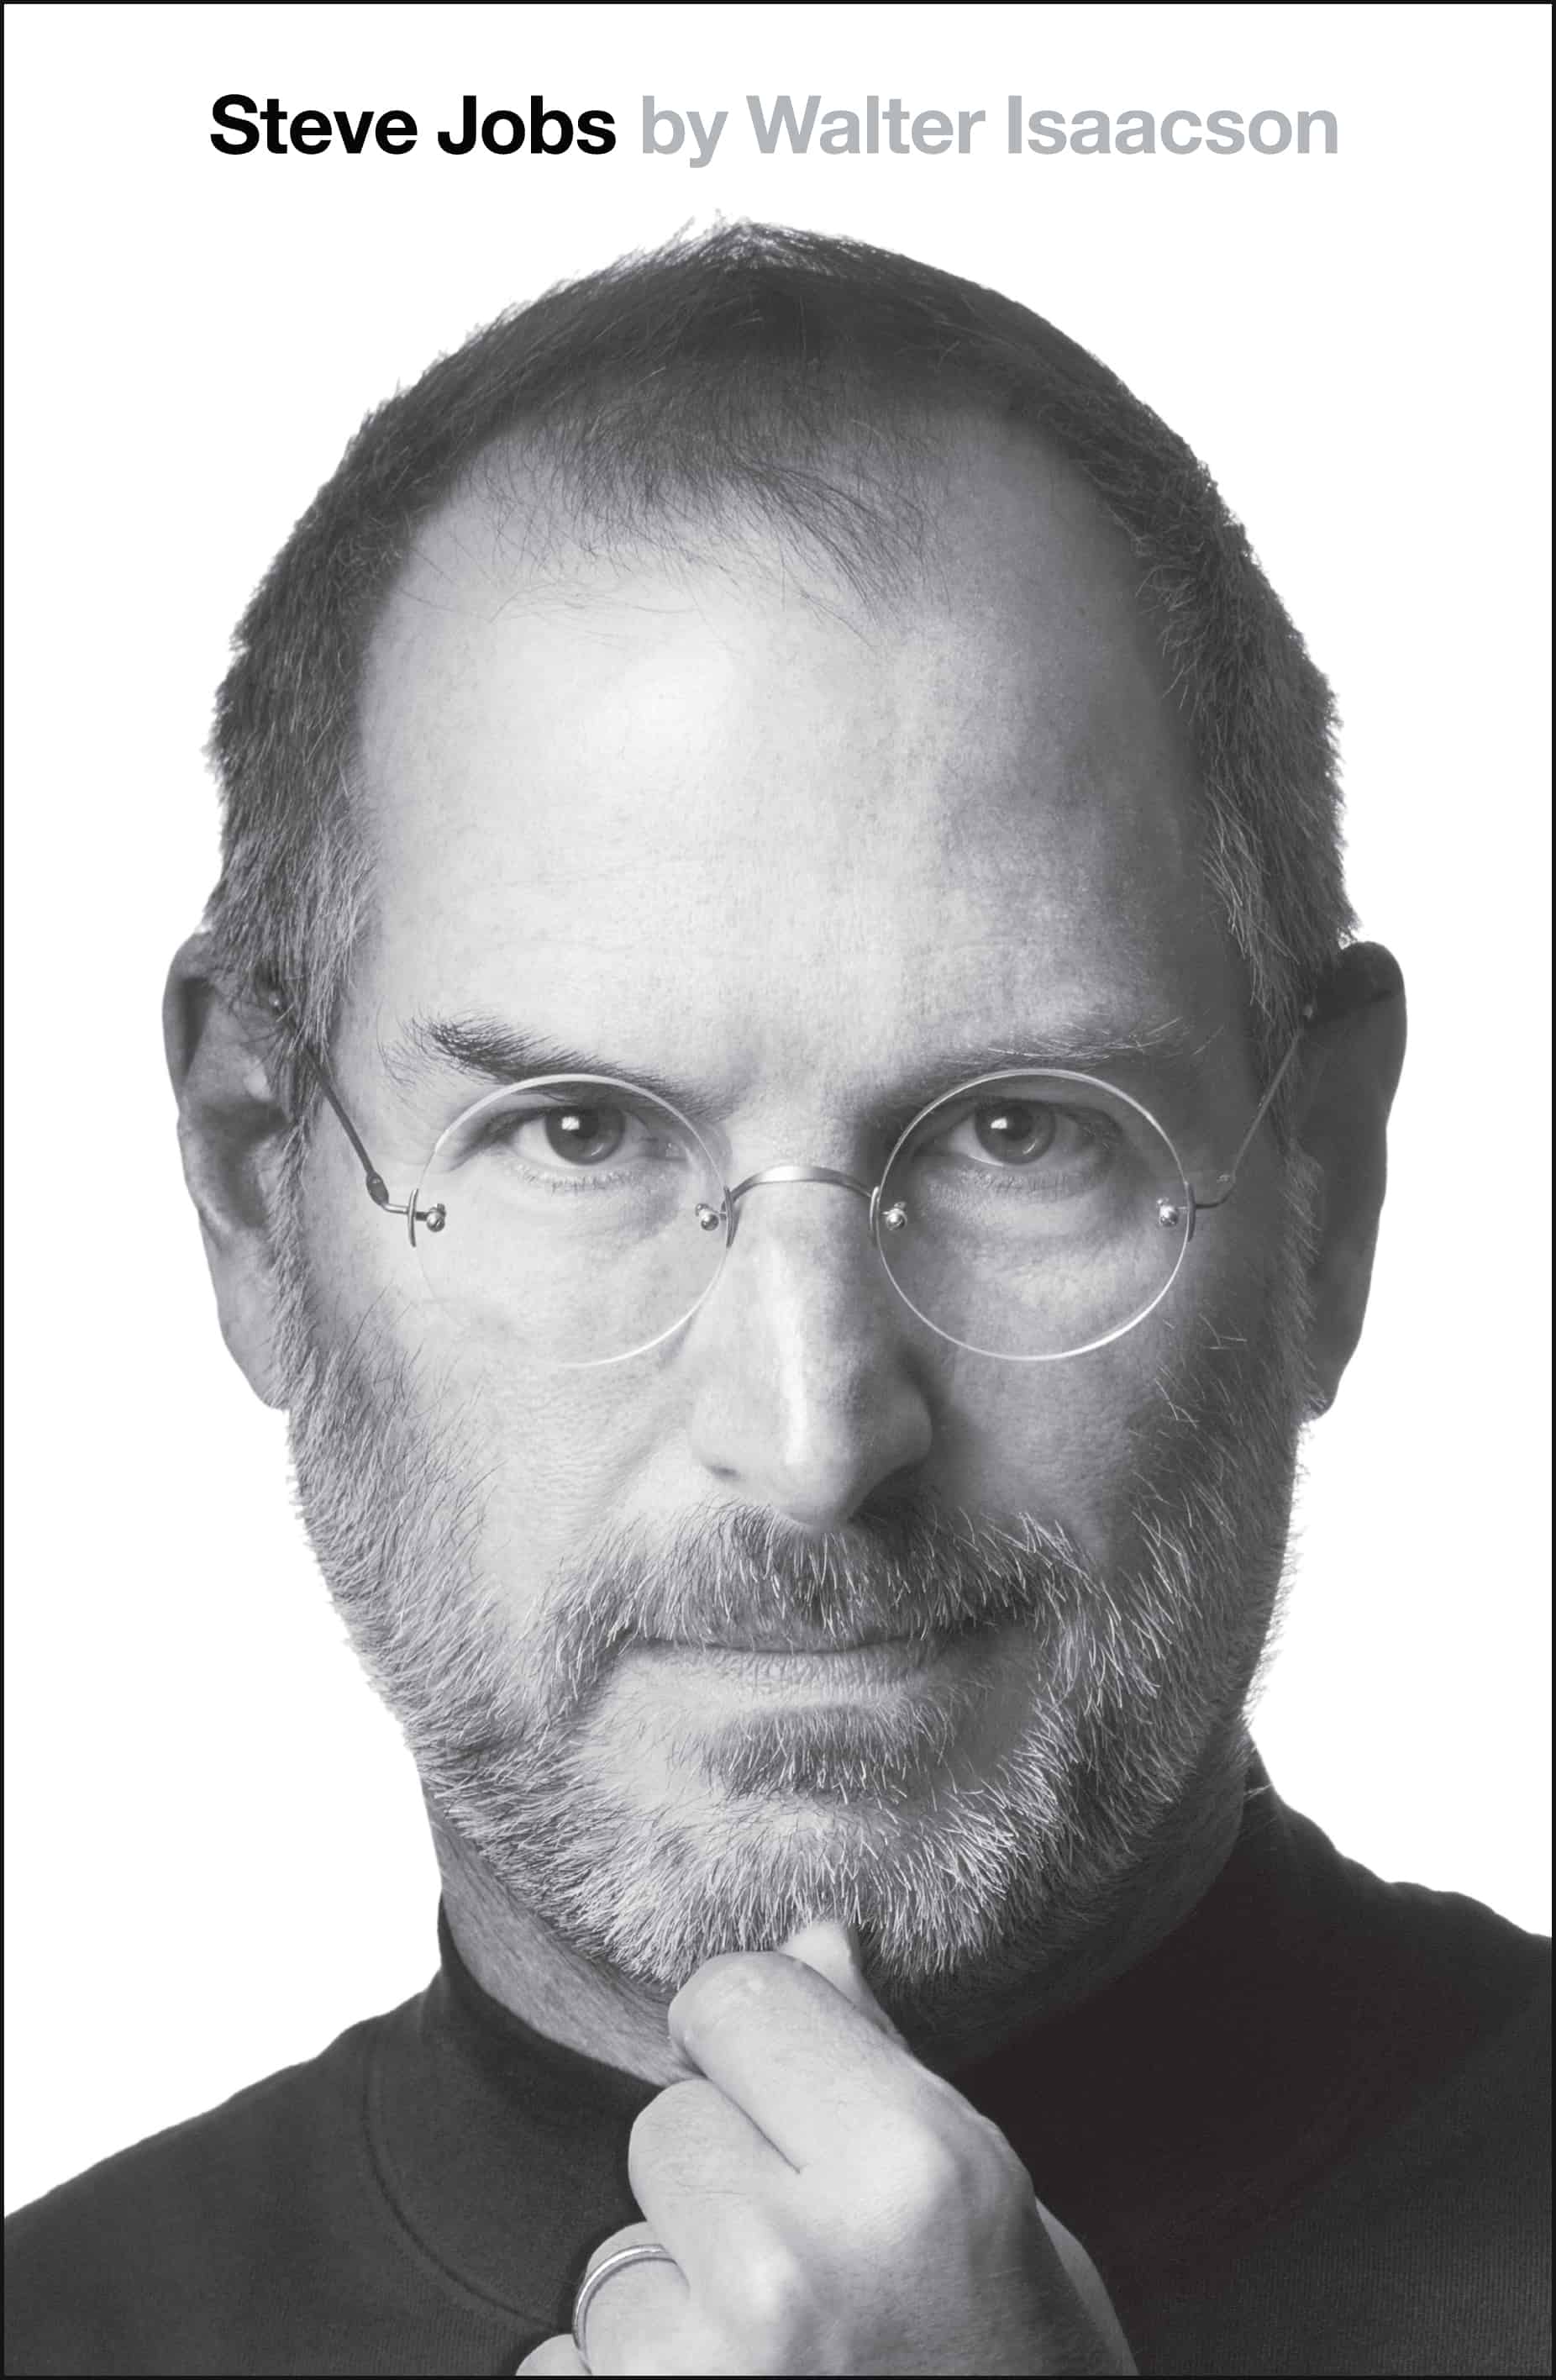 "Steve Jobs" by Walter Isaacson